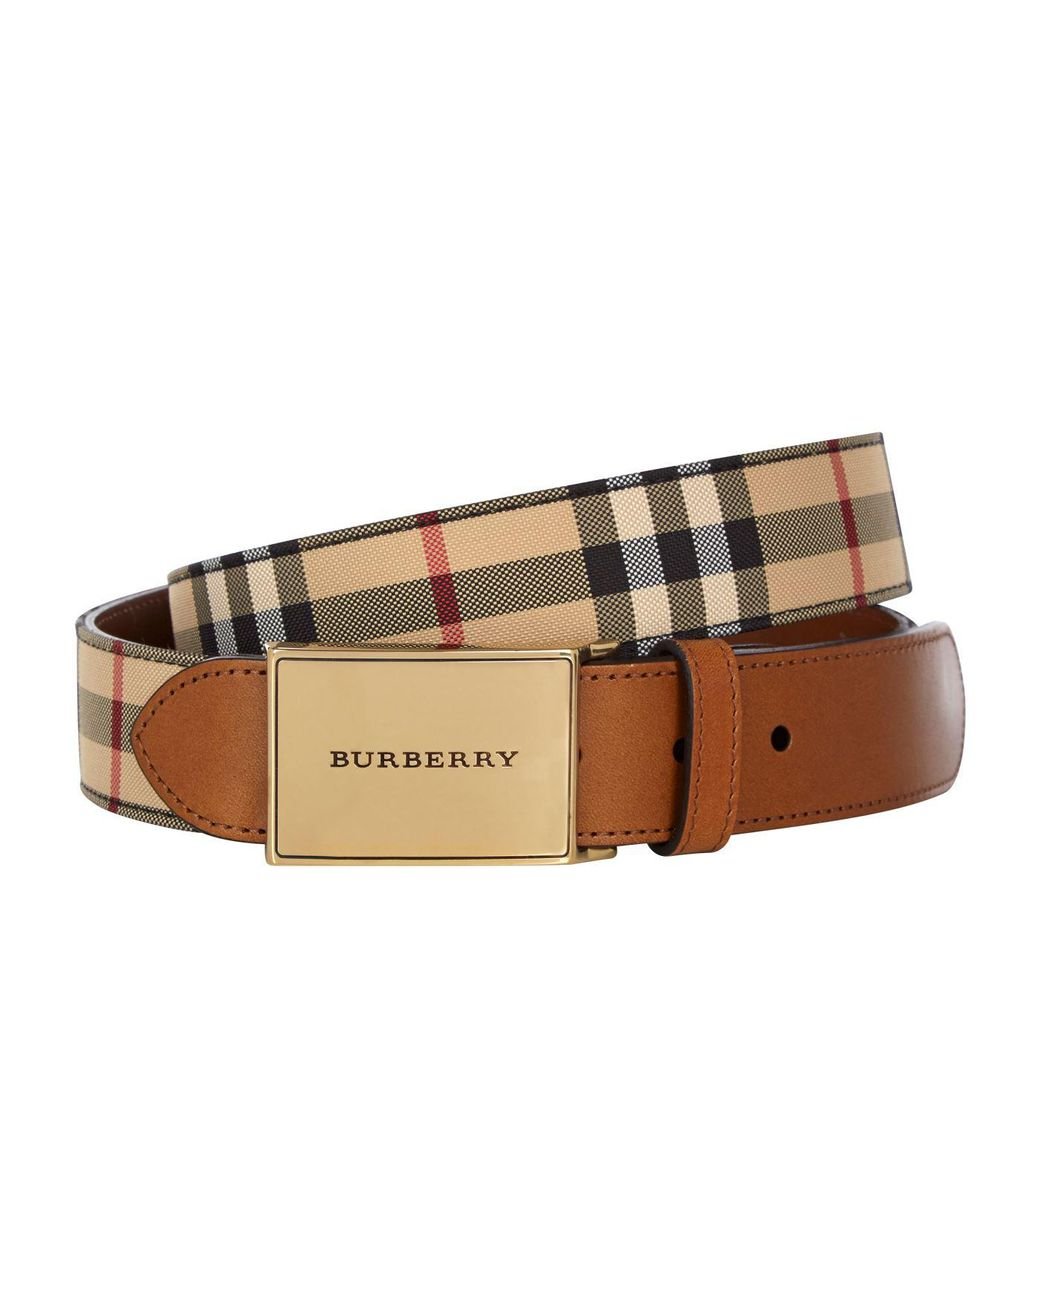 mens buckle burberry belt